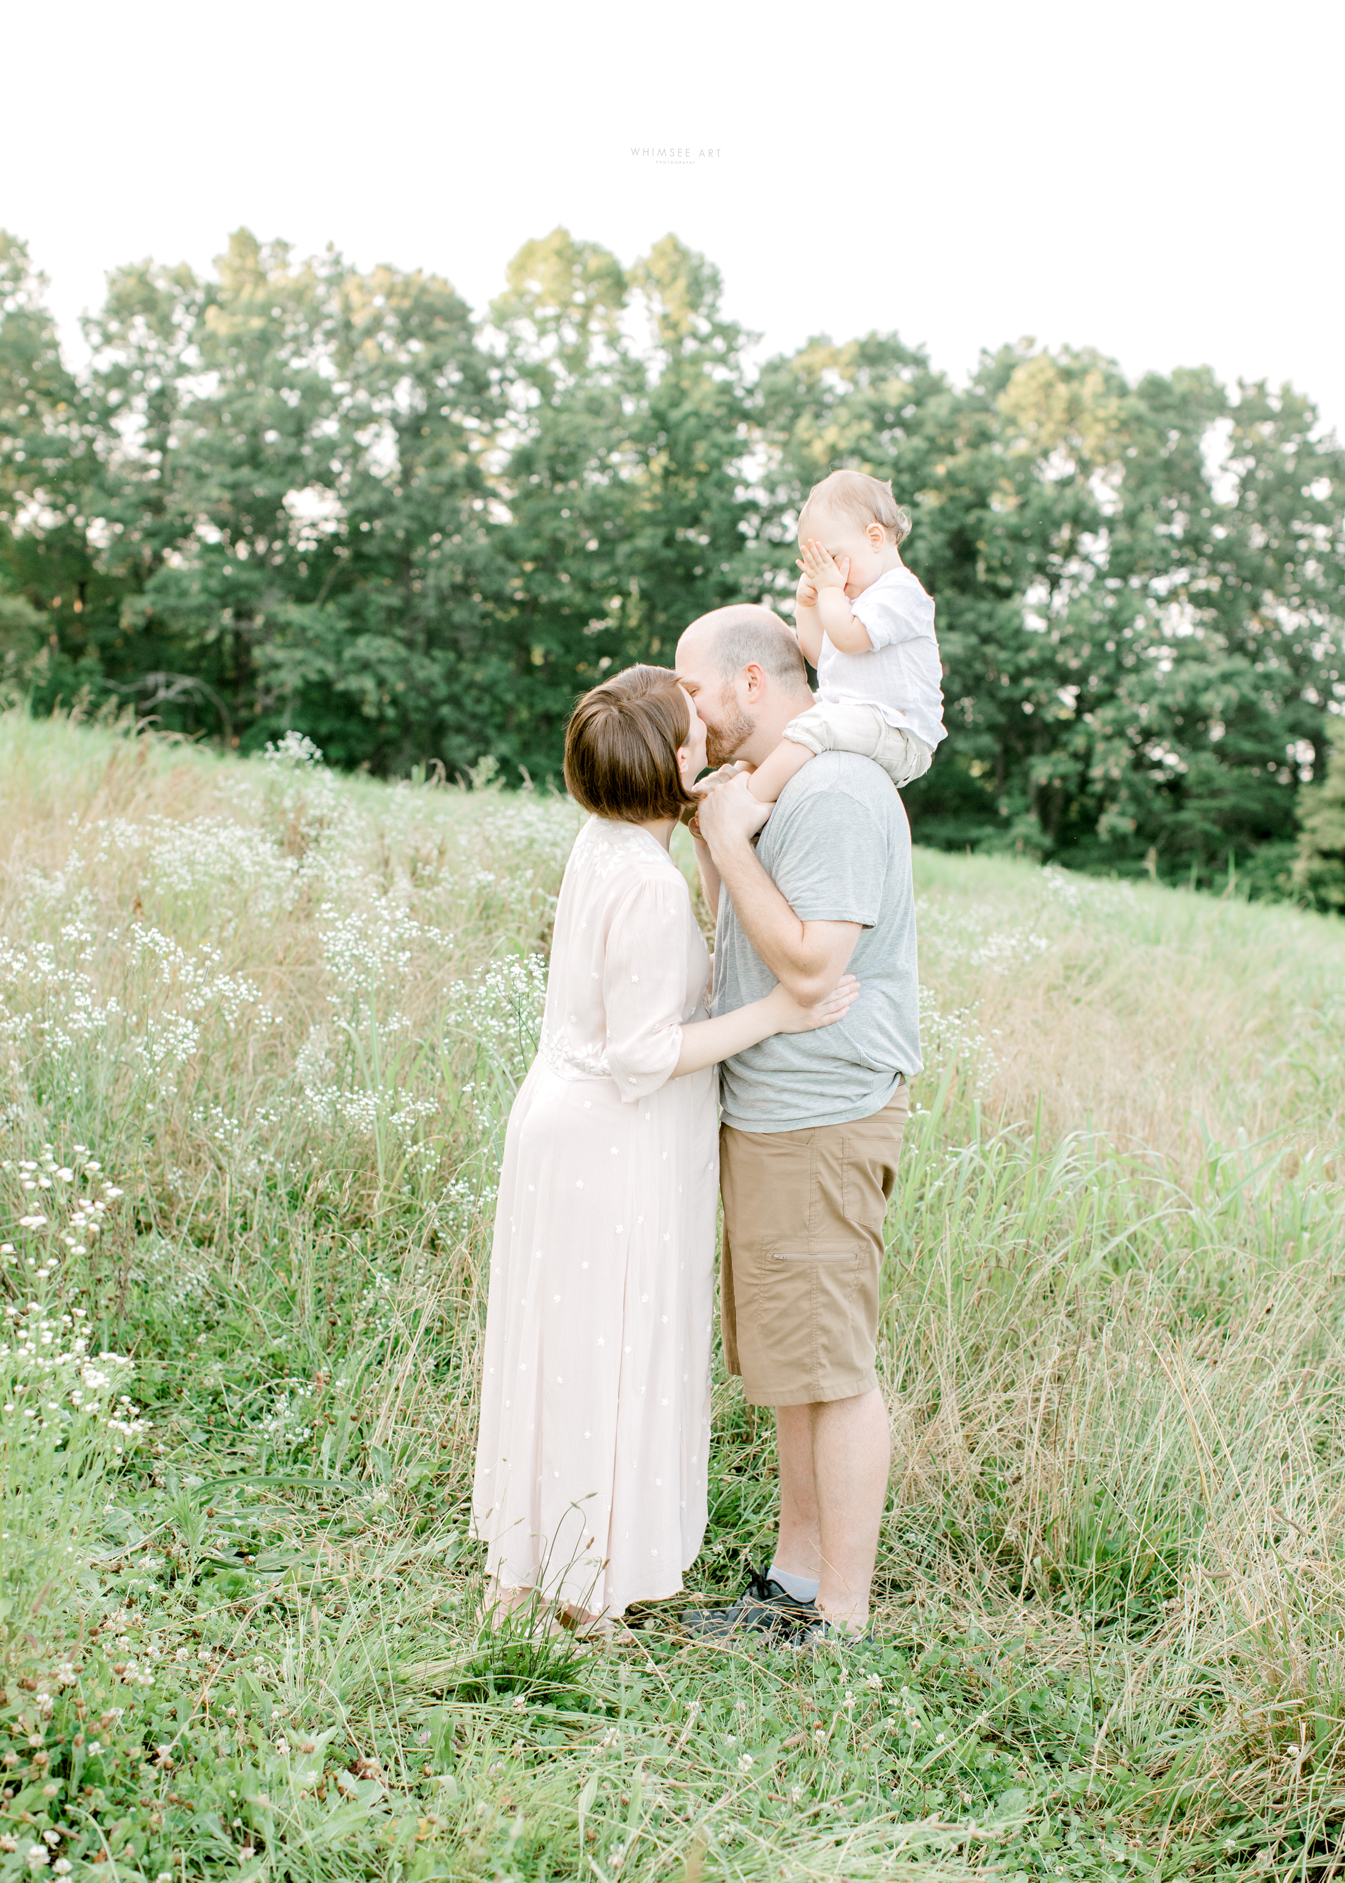 Liam Turns One! | Roanoke Family Photographer | Whimsee Art Photographer